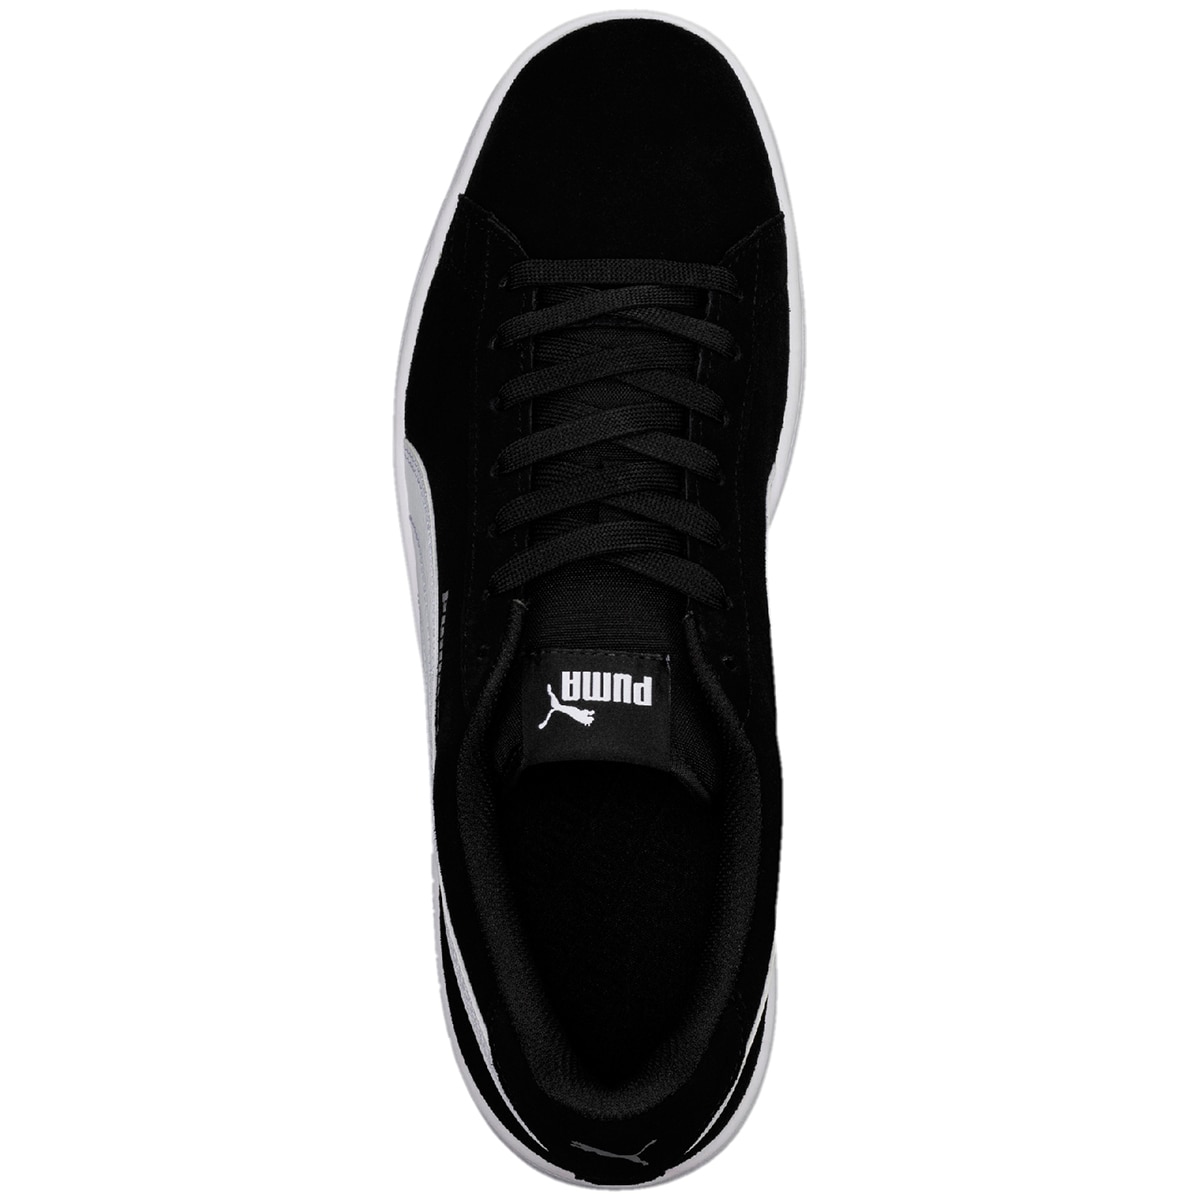 Puma Smash shoe - Black